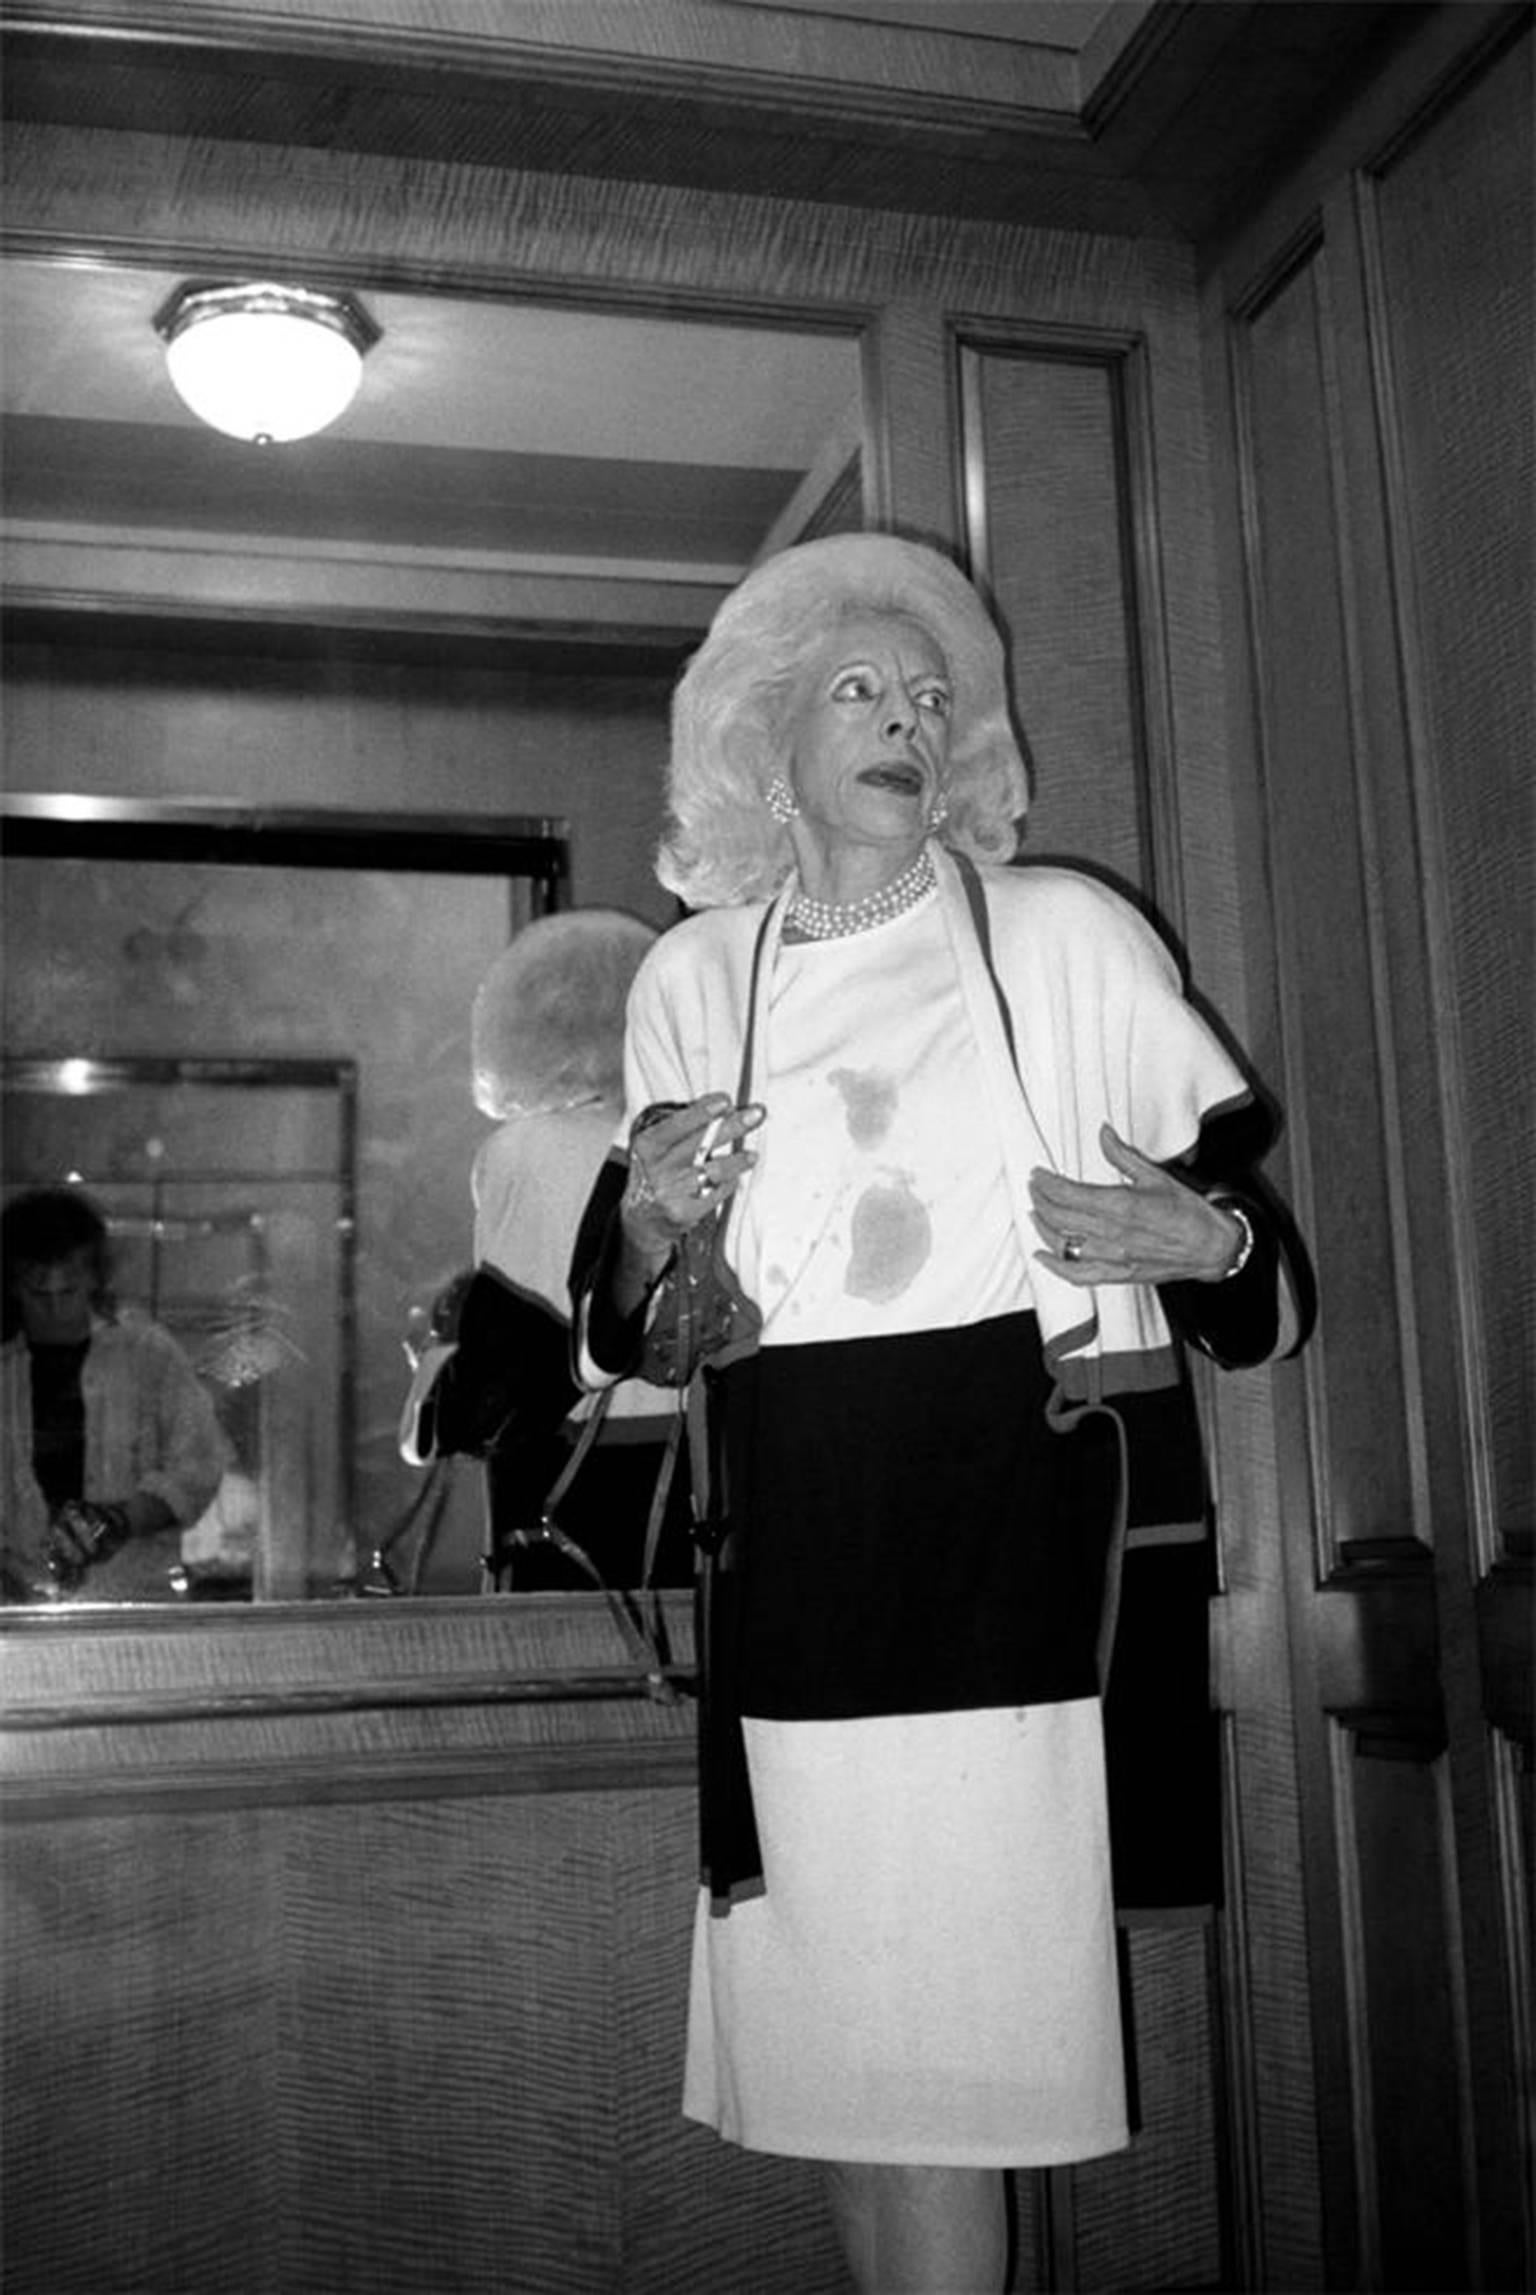 Graham Nash Black and White Photograph - Woman in elevator, Philadelphia, PA 1995